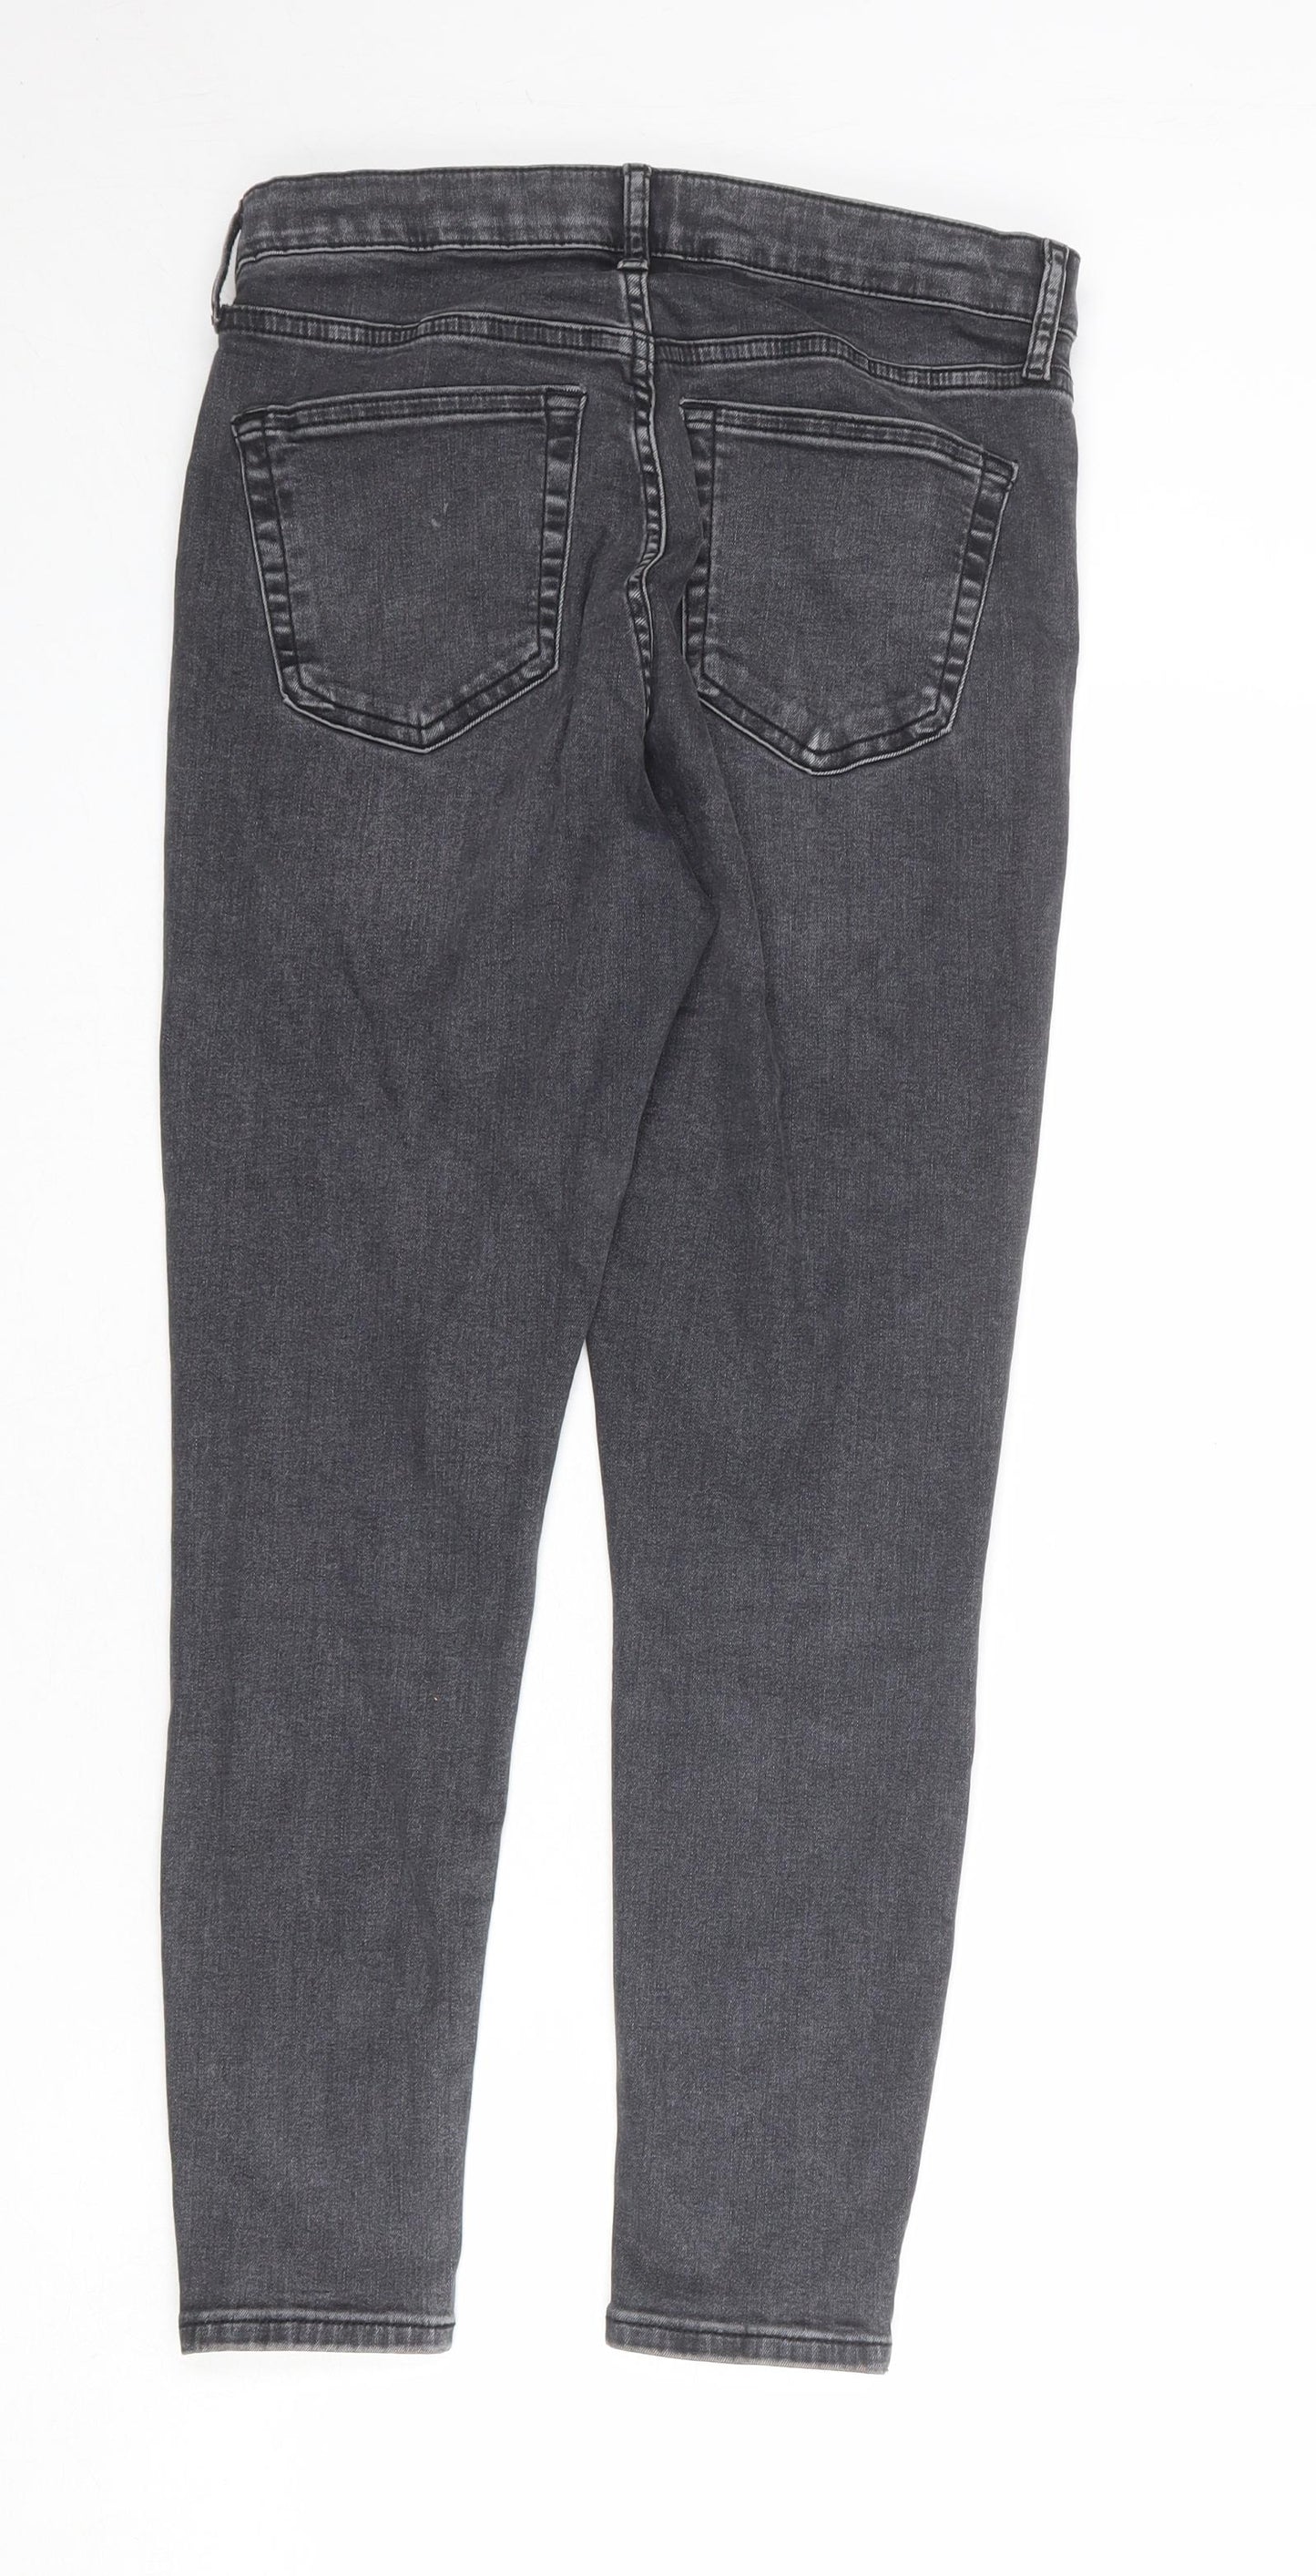 Topshop Womens Grey Cotton Skinny Jeans Size 30 in L30 in Regular Zip